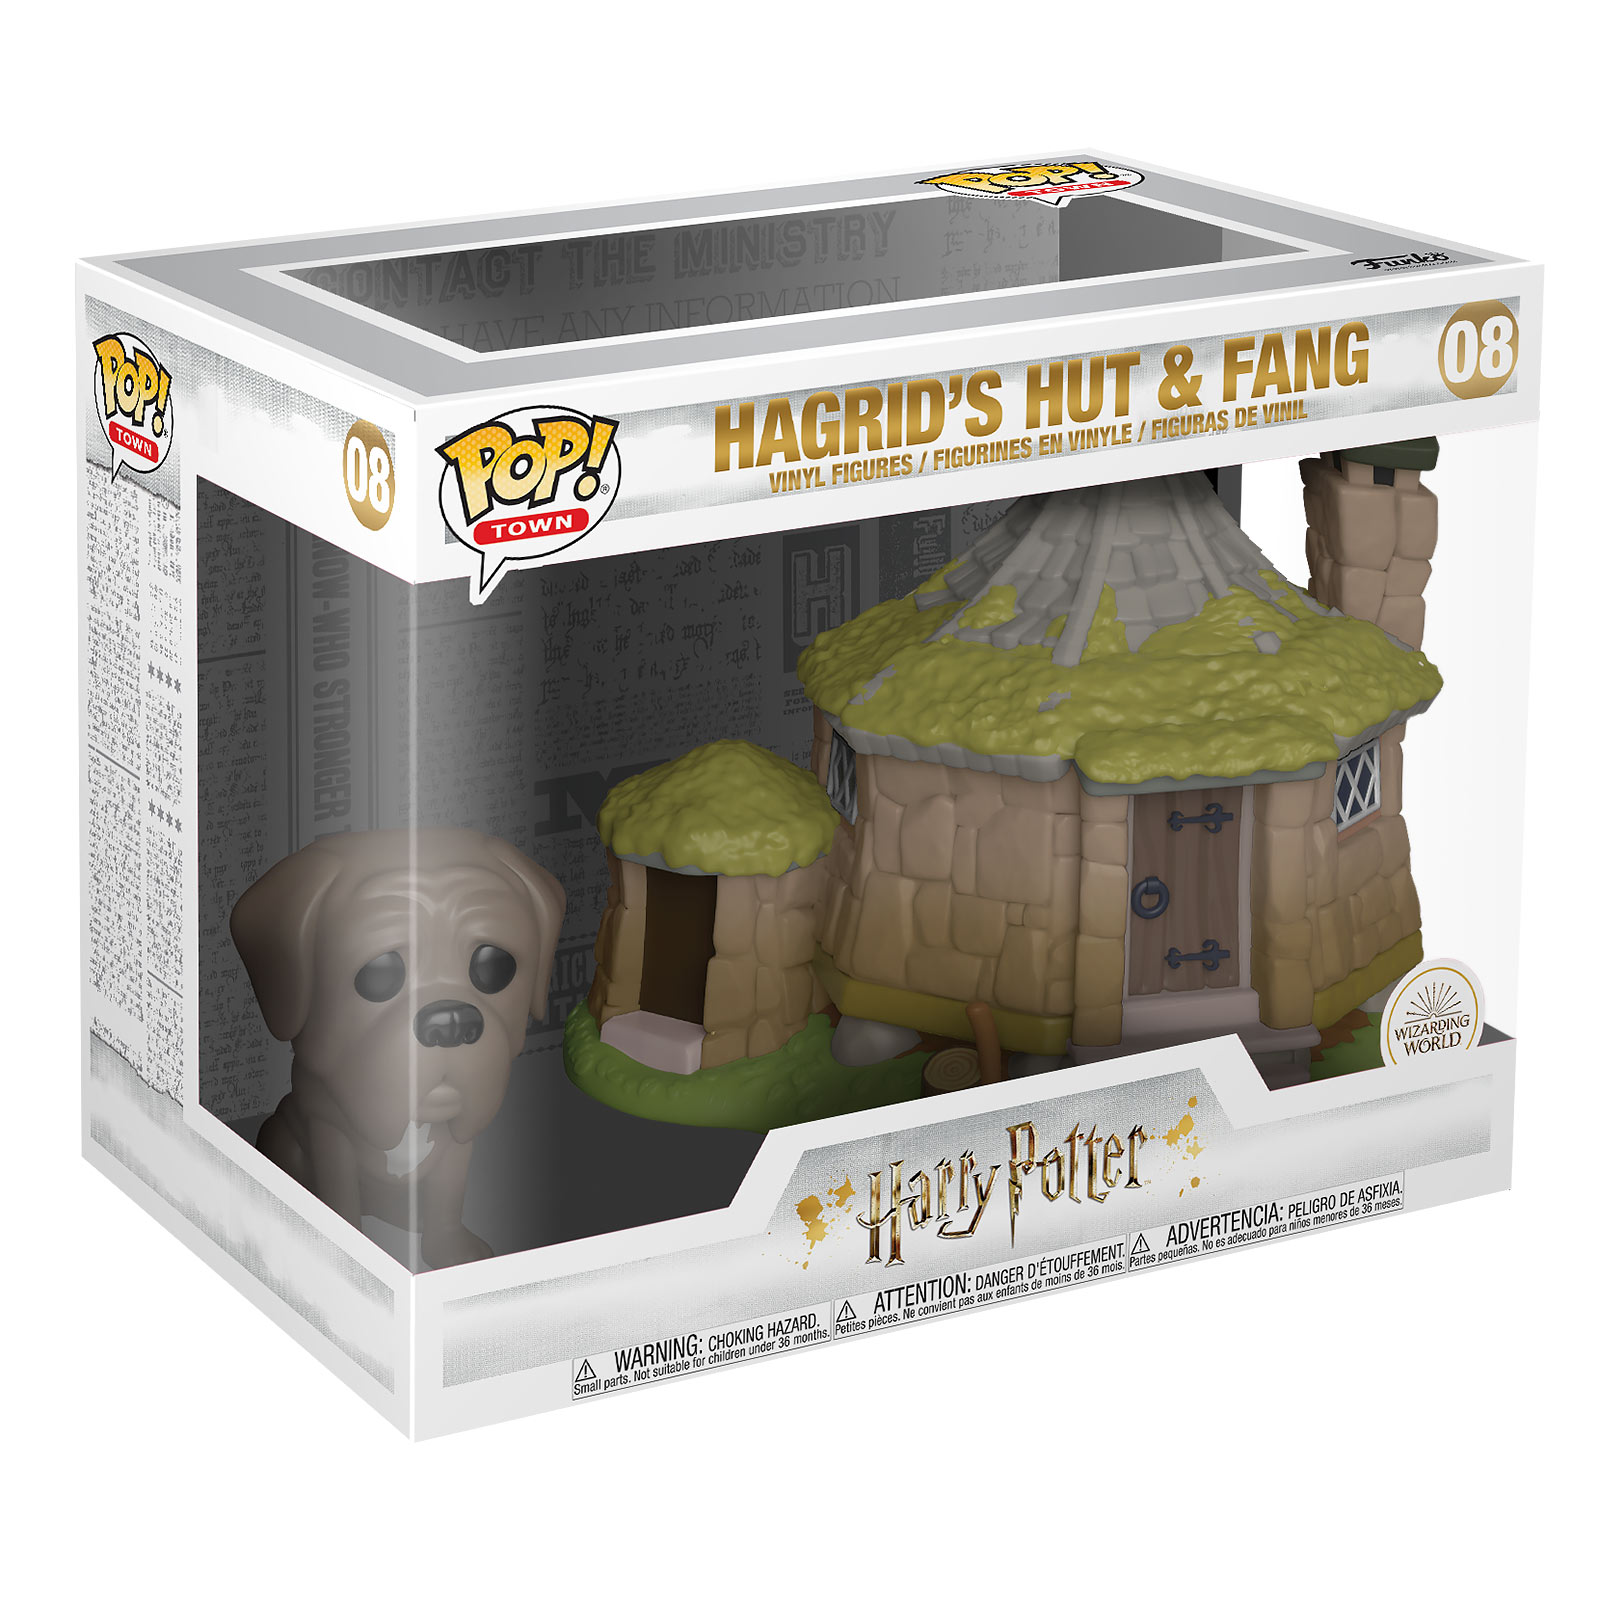 Harry Potter - Hagrid's Hut with Fang Funko Pop Figurine Set